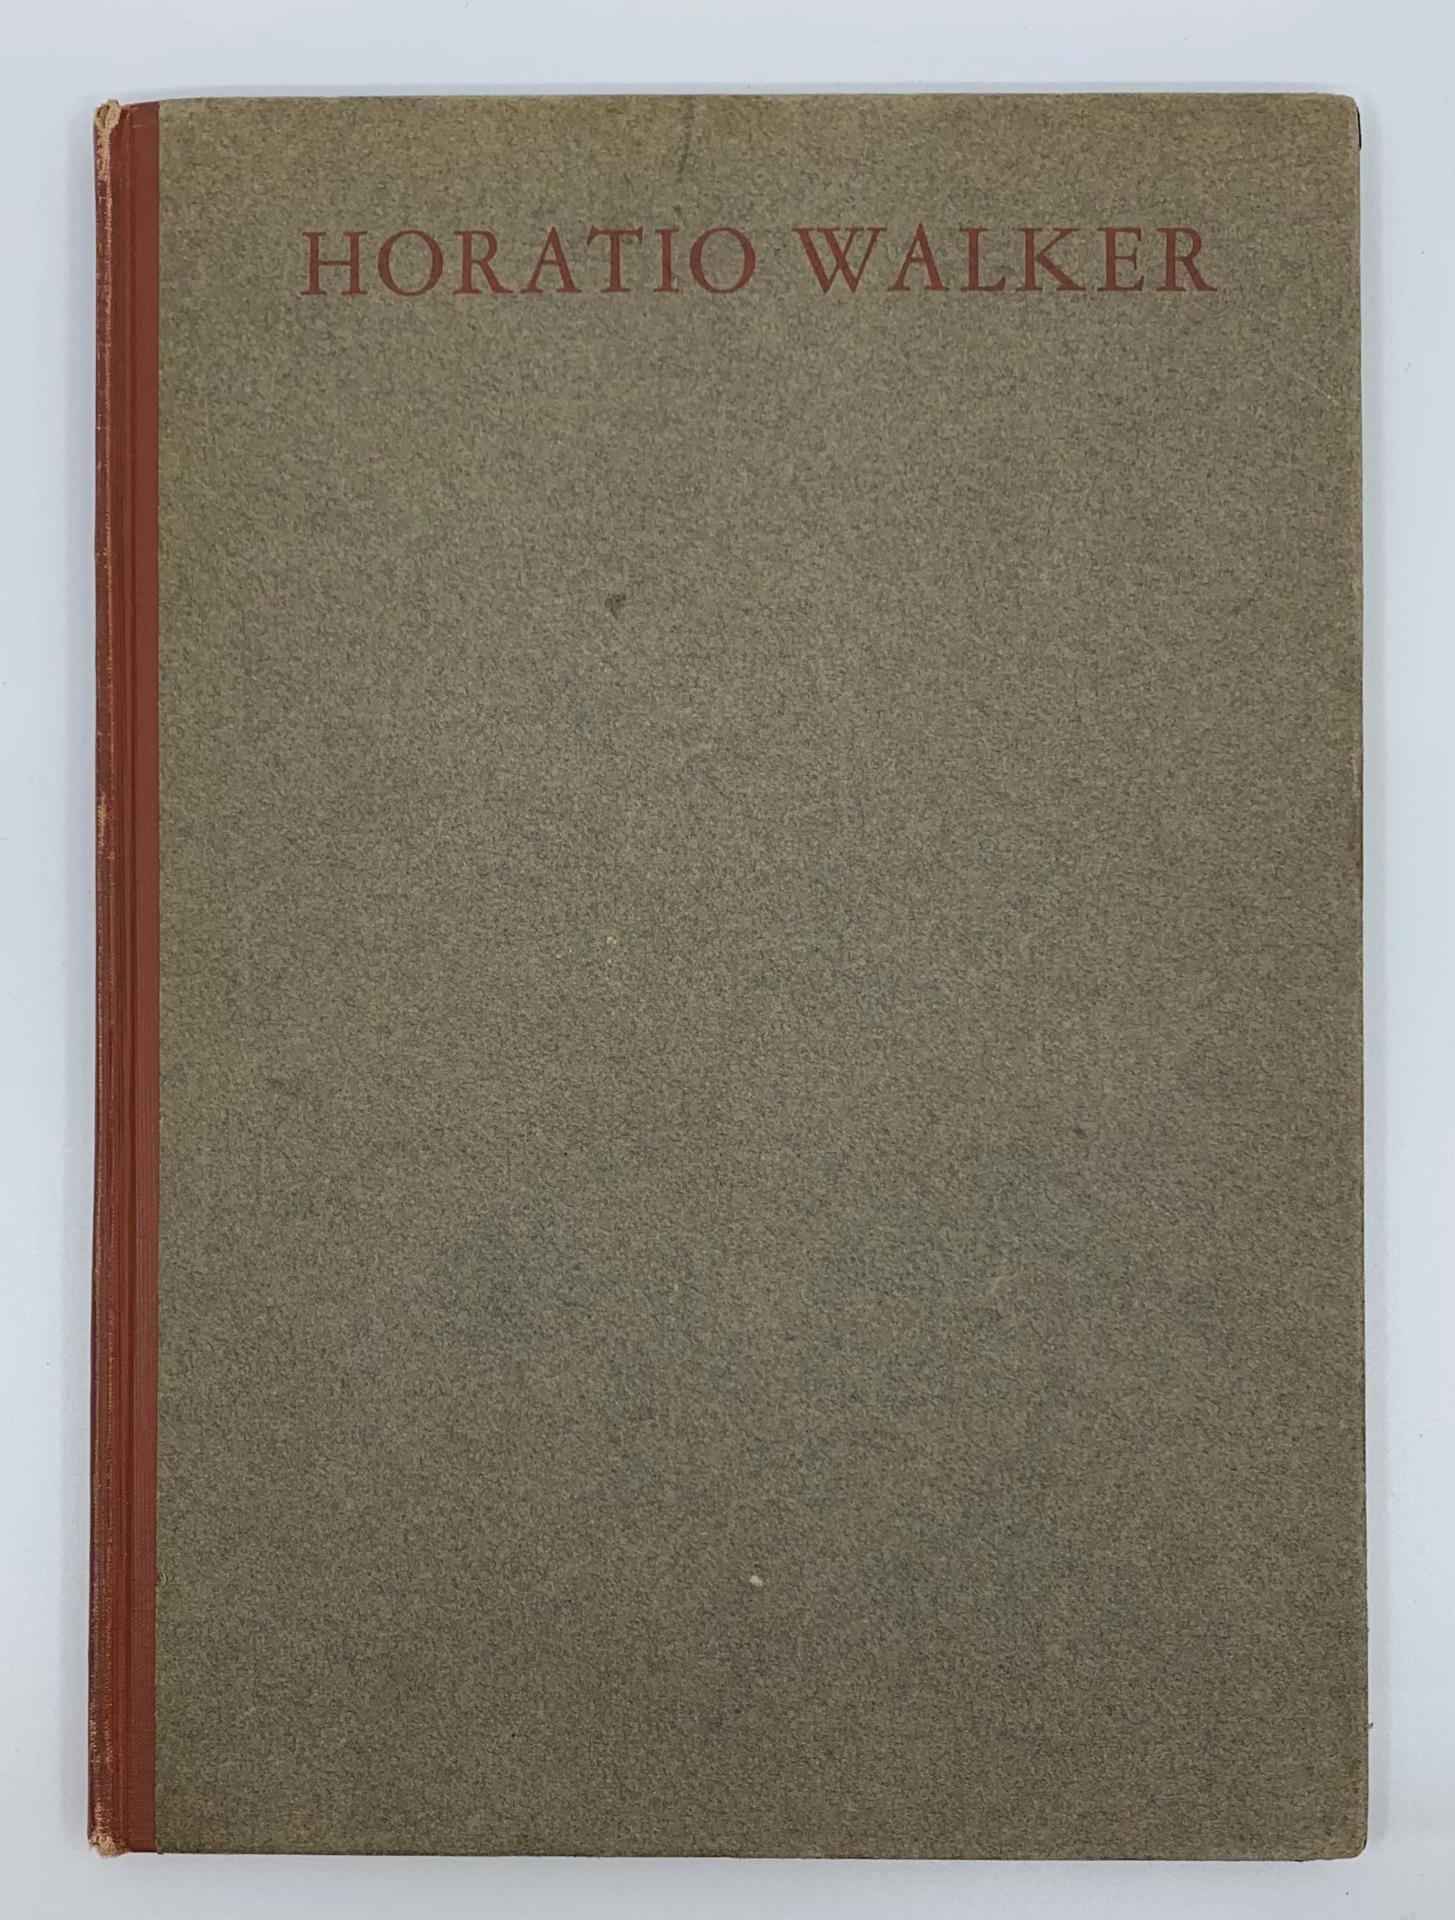 Horatio Walker (1858-1938) - F. Newlin Price, Horatio Walker, 1928